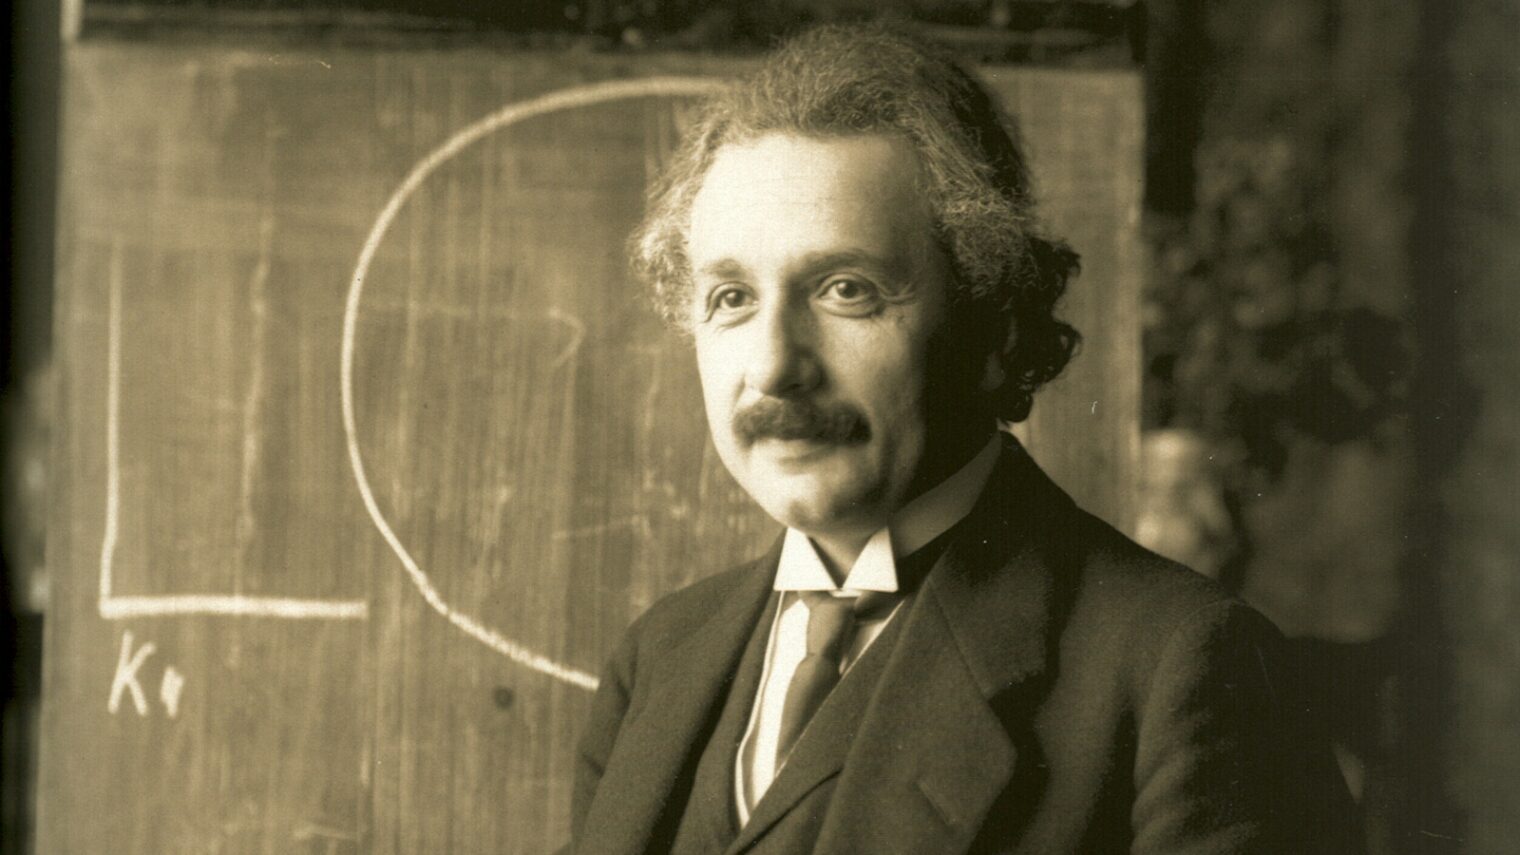 Photo courtesy of The Albert Einstein Archives at Hebrew University